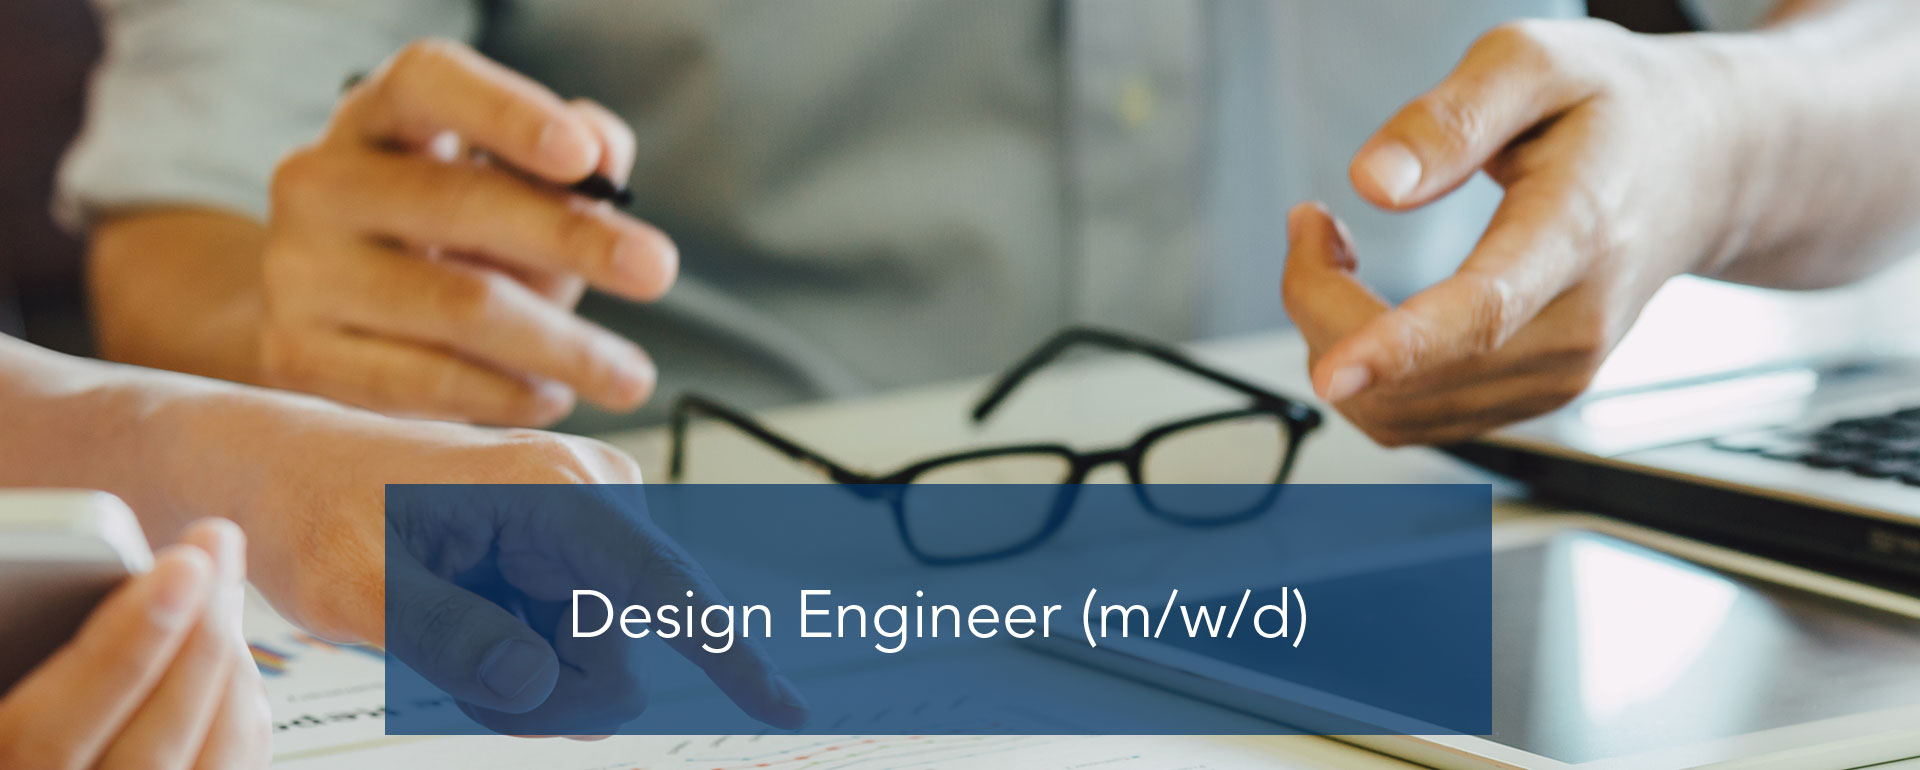 Design Engineer (m/w/d)